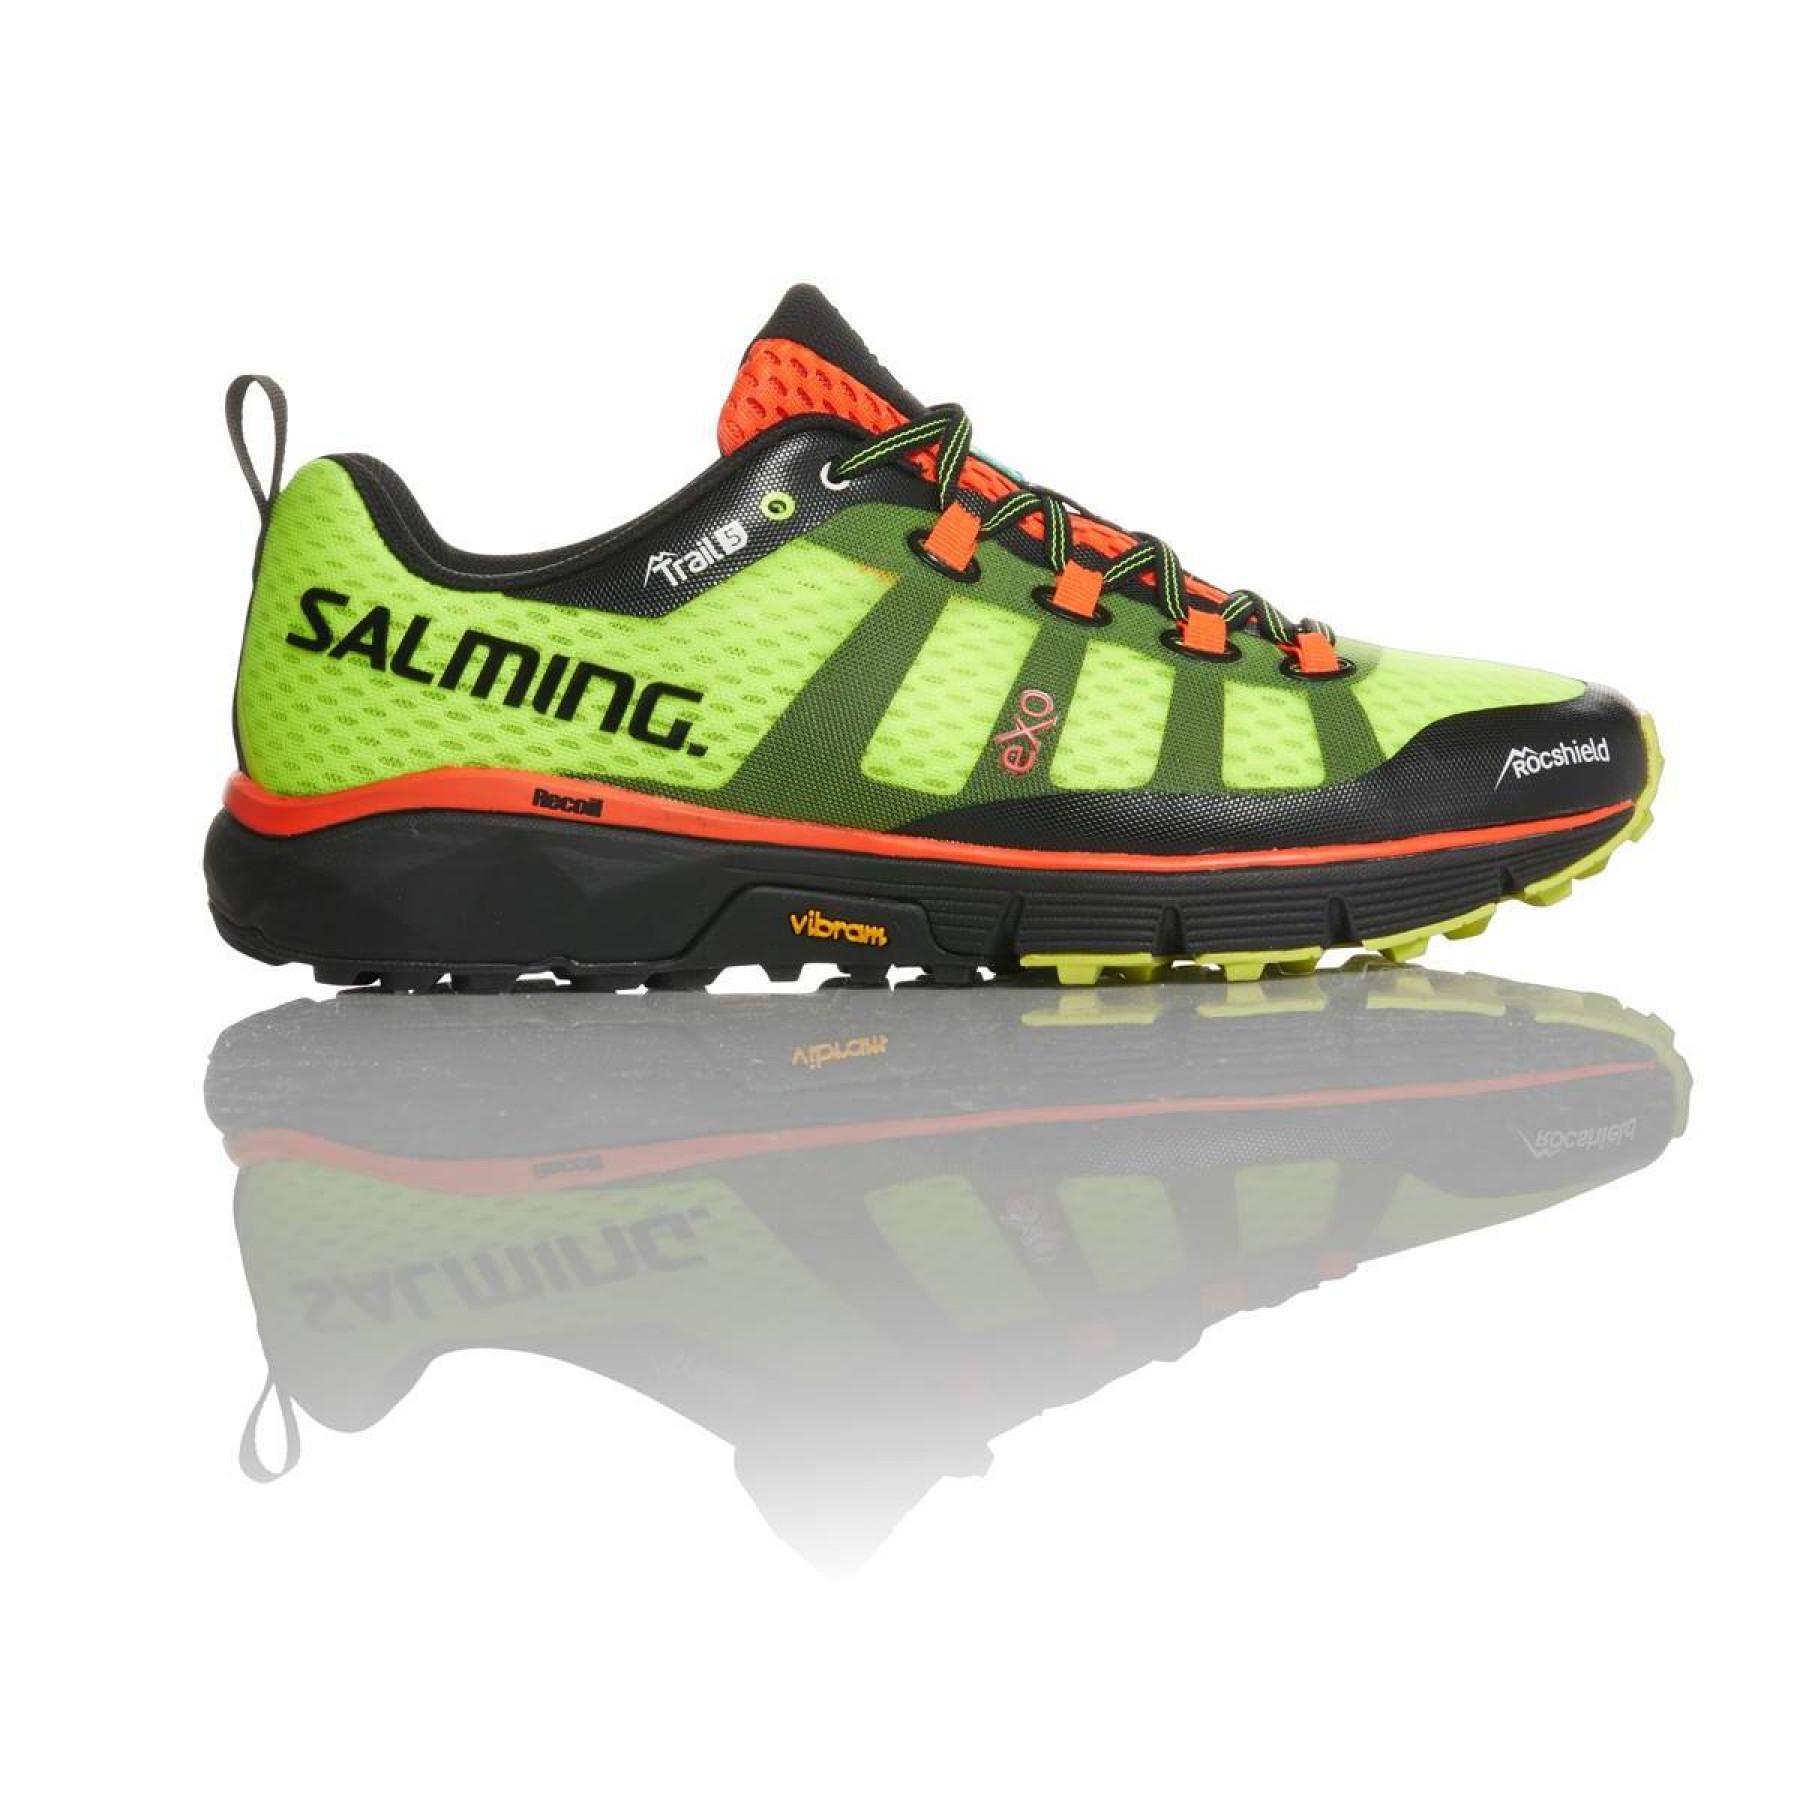 Schuhe Salming trail T5 